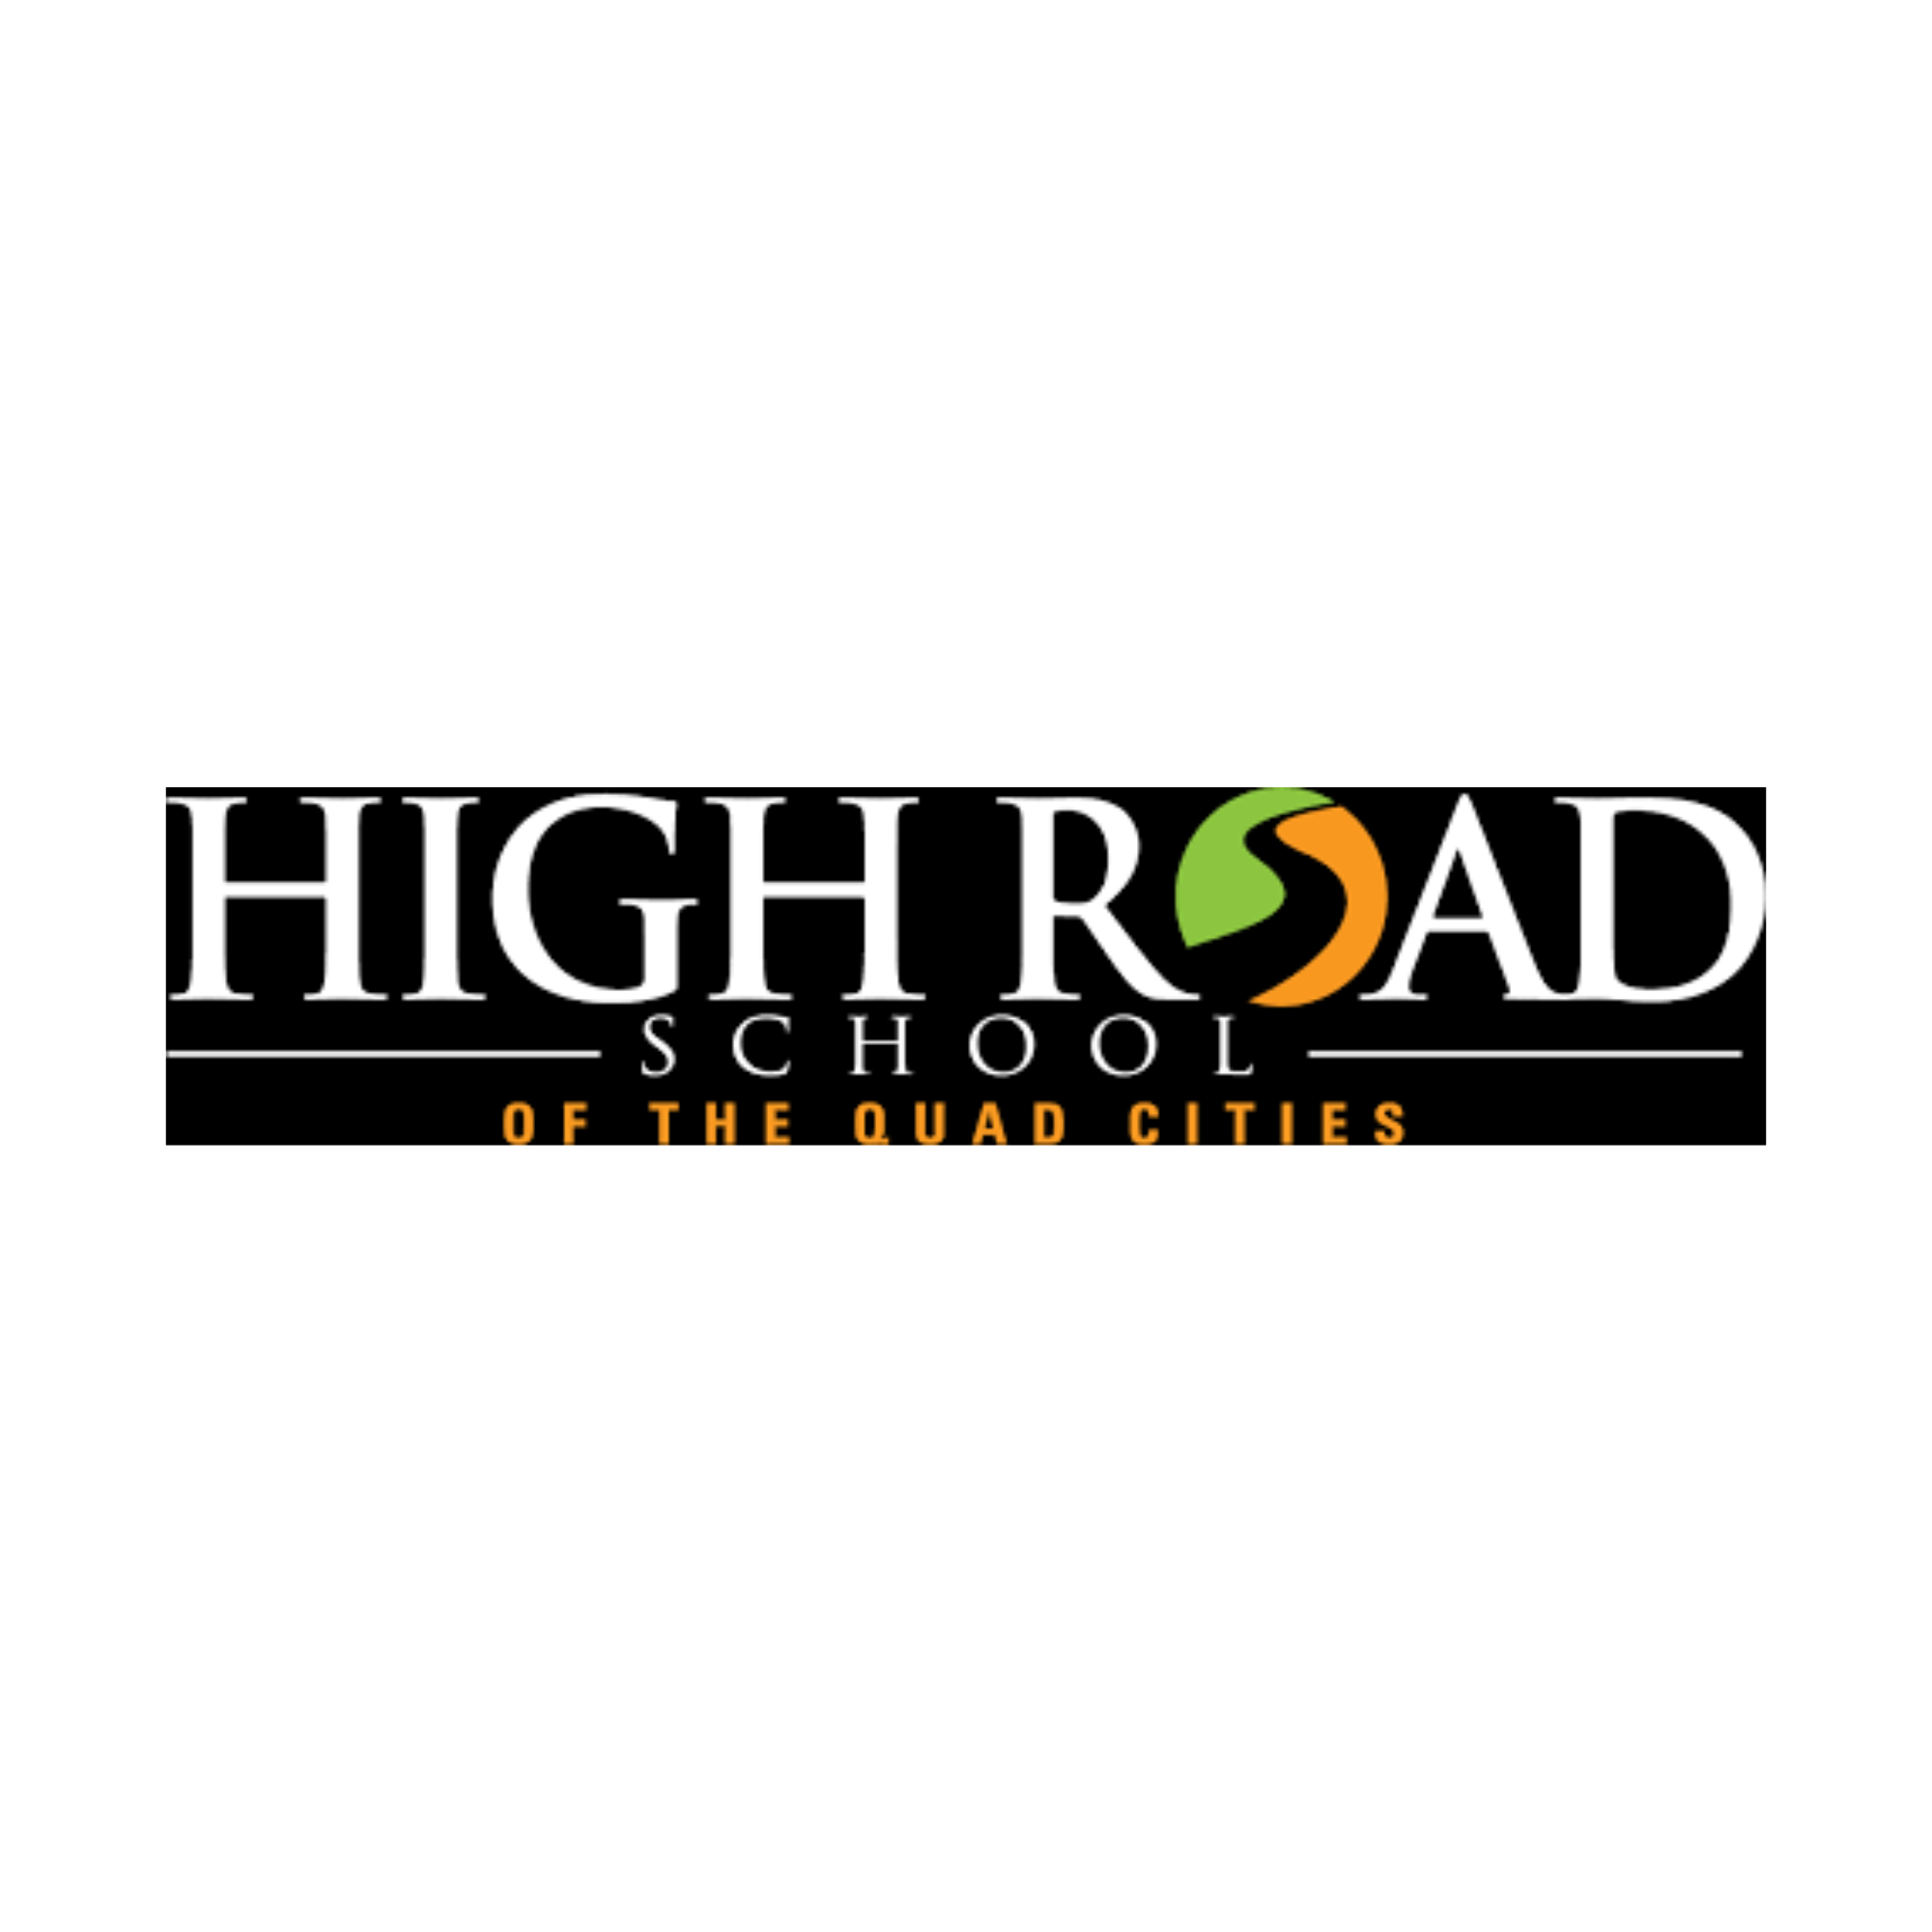 Highroad logo